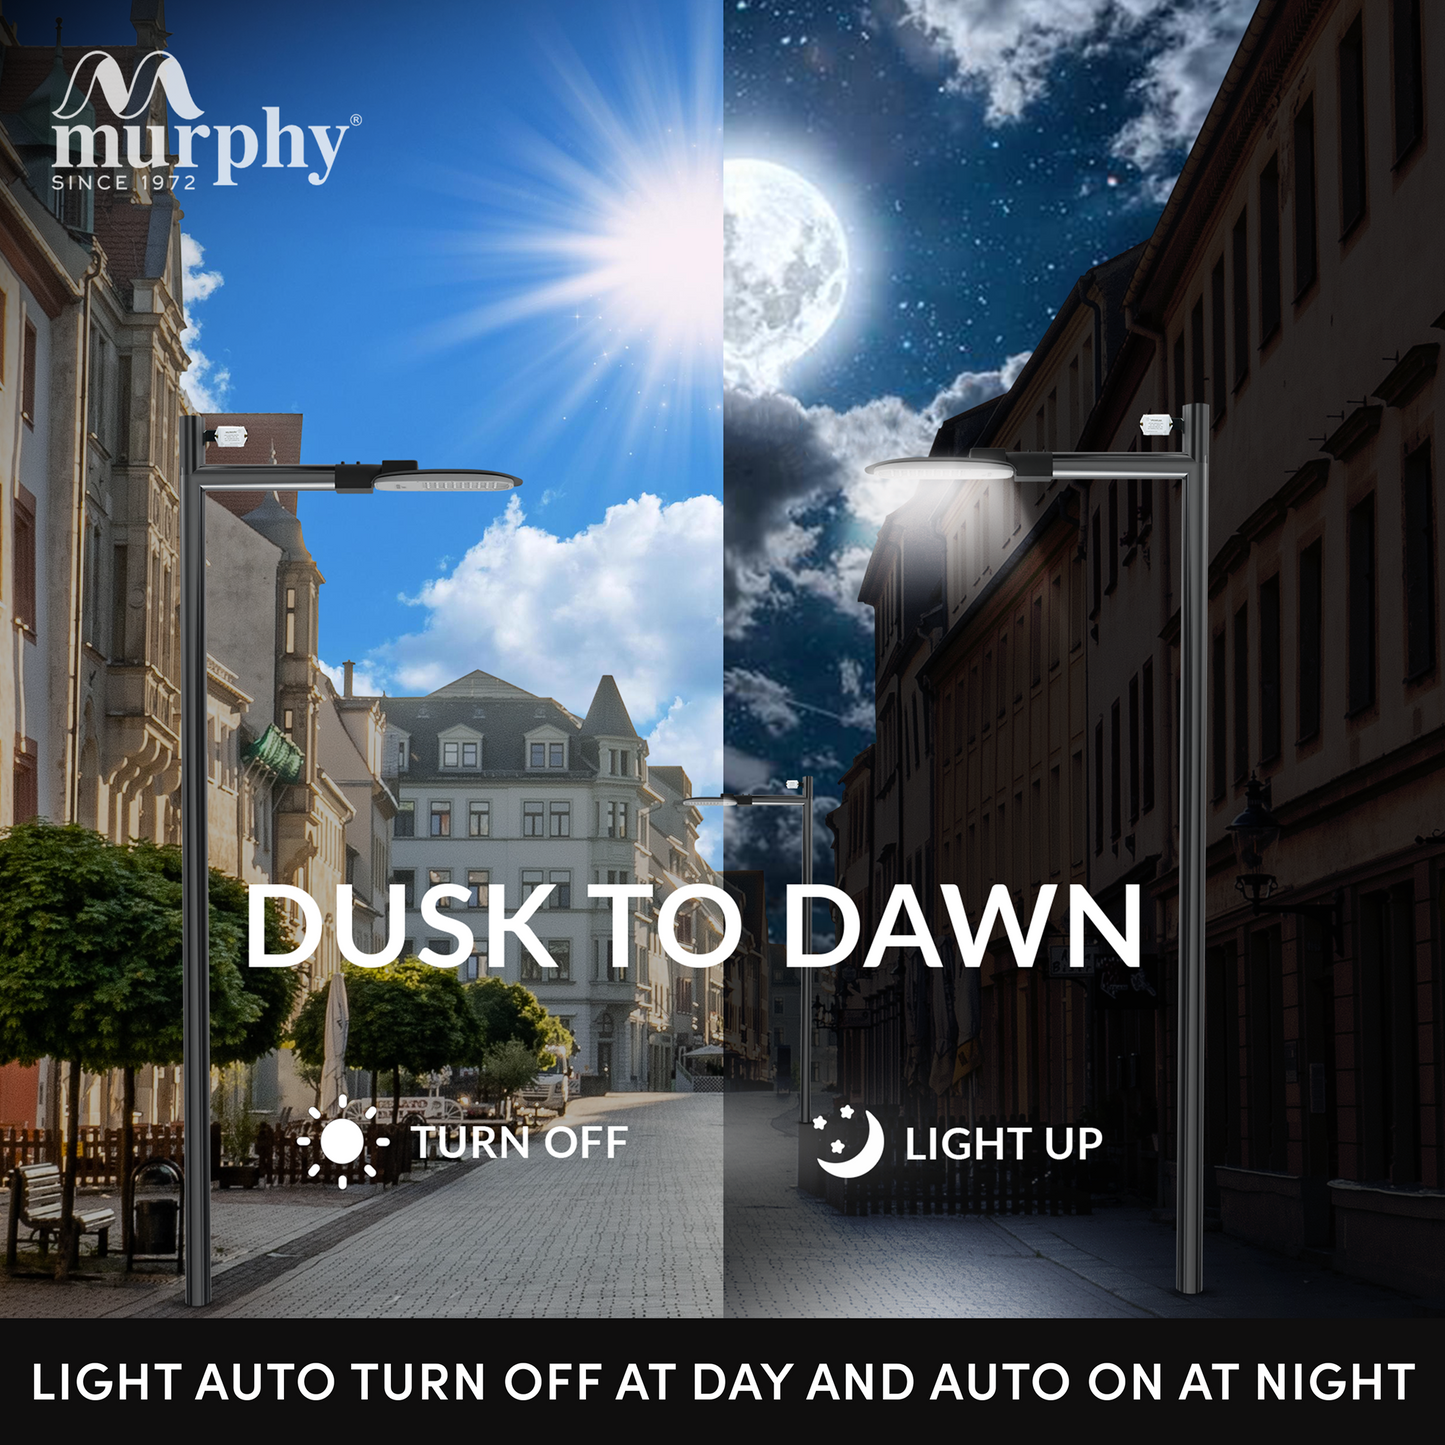 Murphy LED 24W Lenza-X Street Light With Auto On/Off Day Night Light Sensor